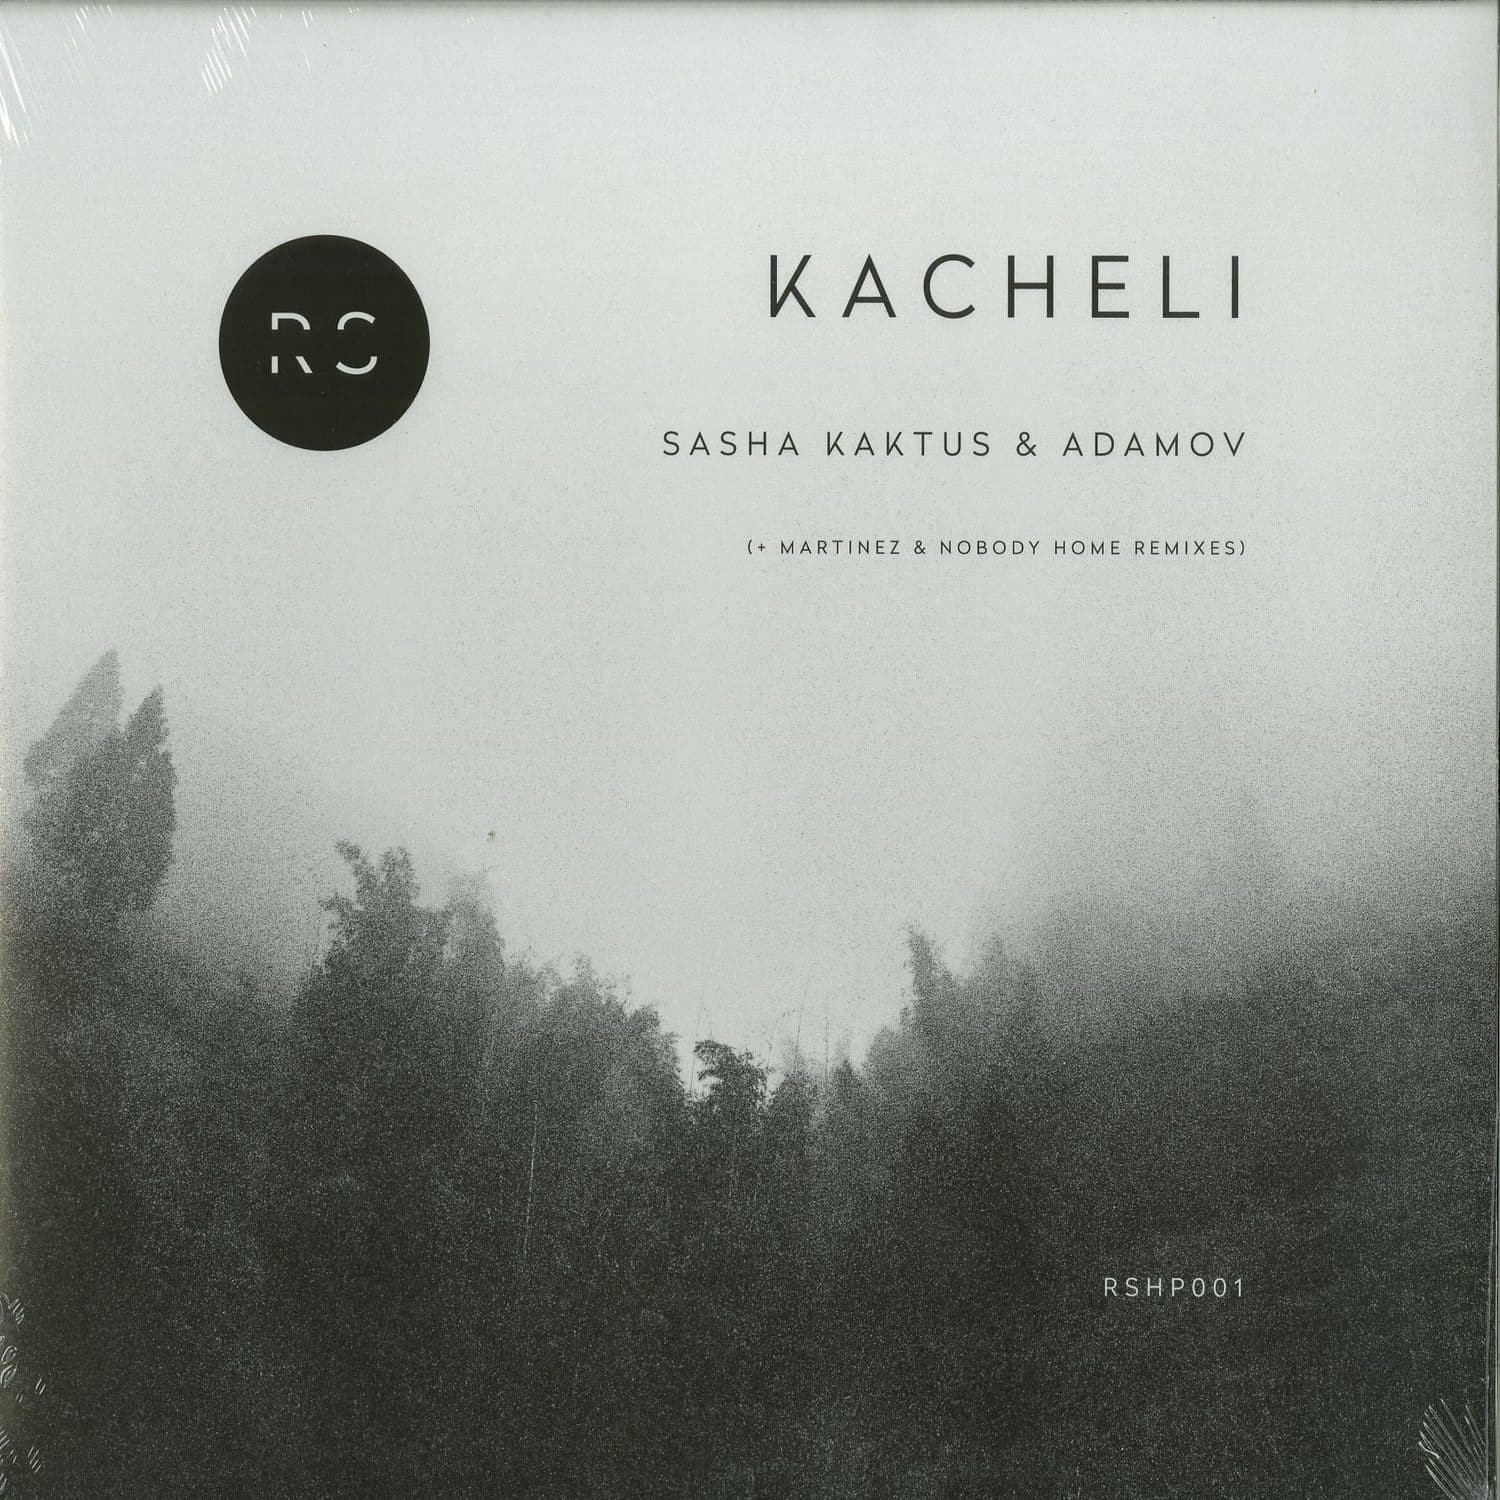 Sasha Kaktus & Adamov - KACHELI 